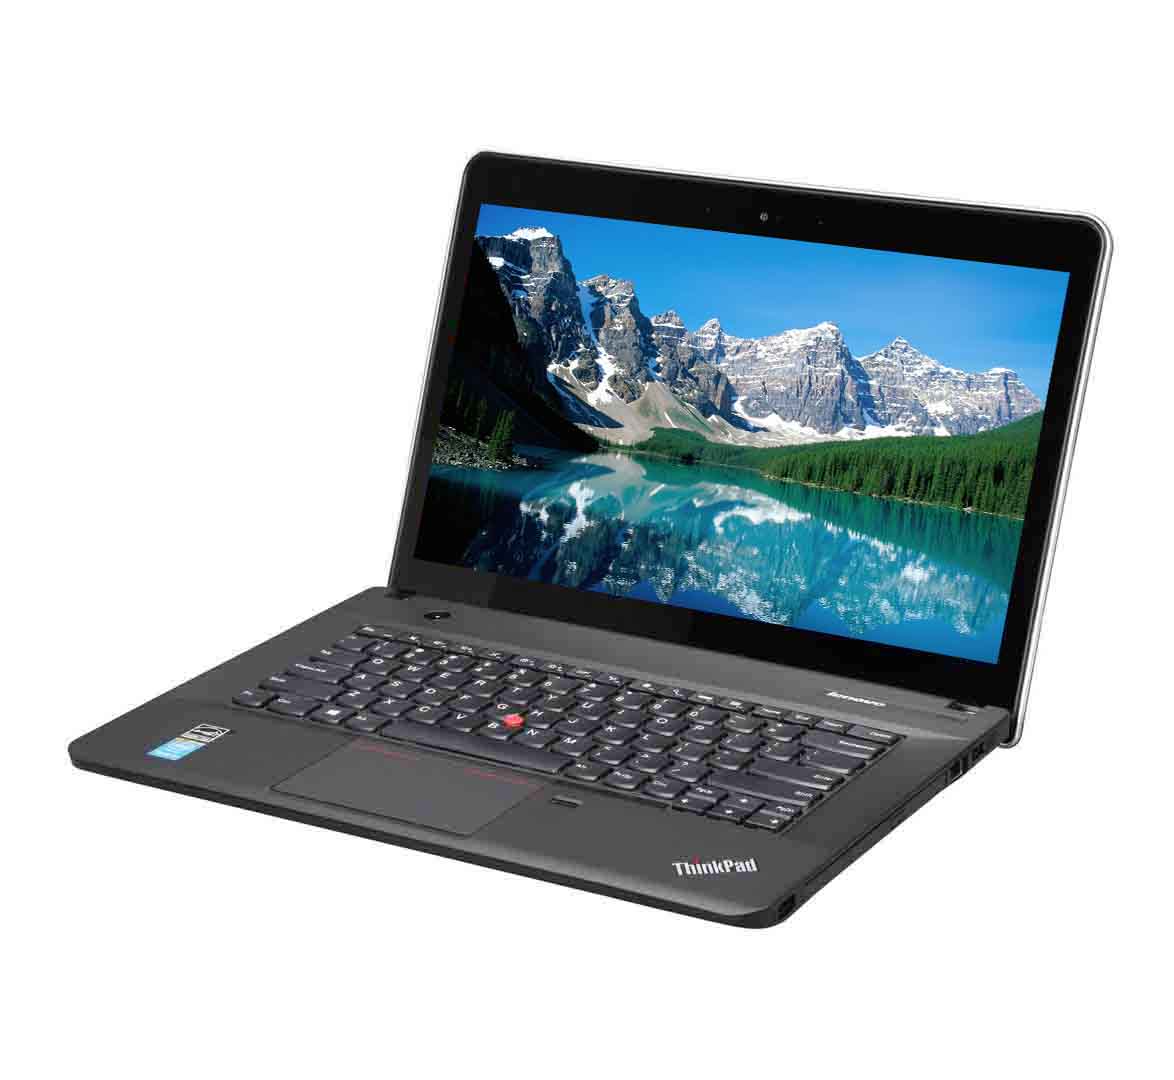 Lenovo ThinkPad E440 Business Laptop, Intel Core i3-3rd Generation CPU, 4GB RAM, 500GB HDD, 14 inch Display, Windows 10 Pro, Refurbished Laptop